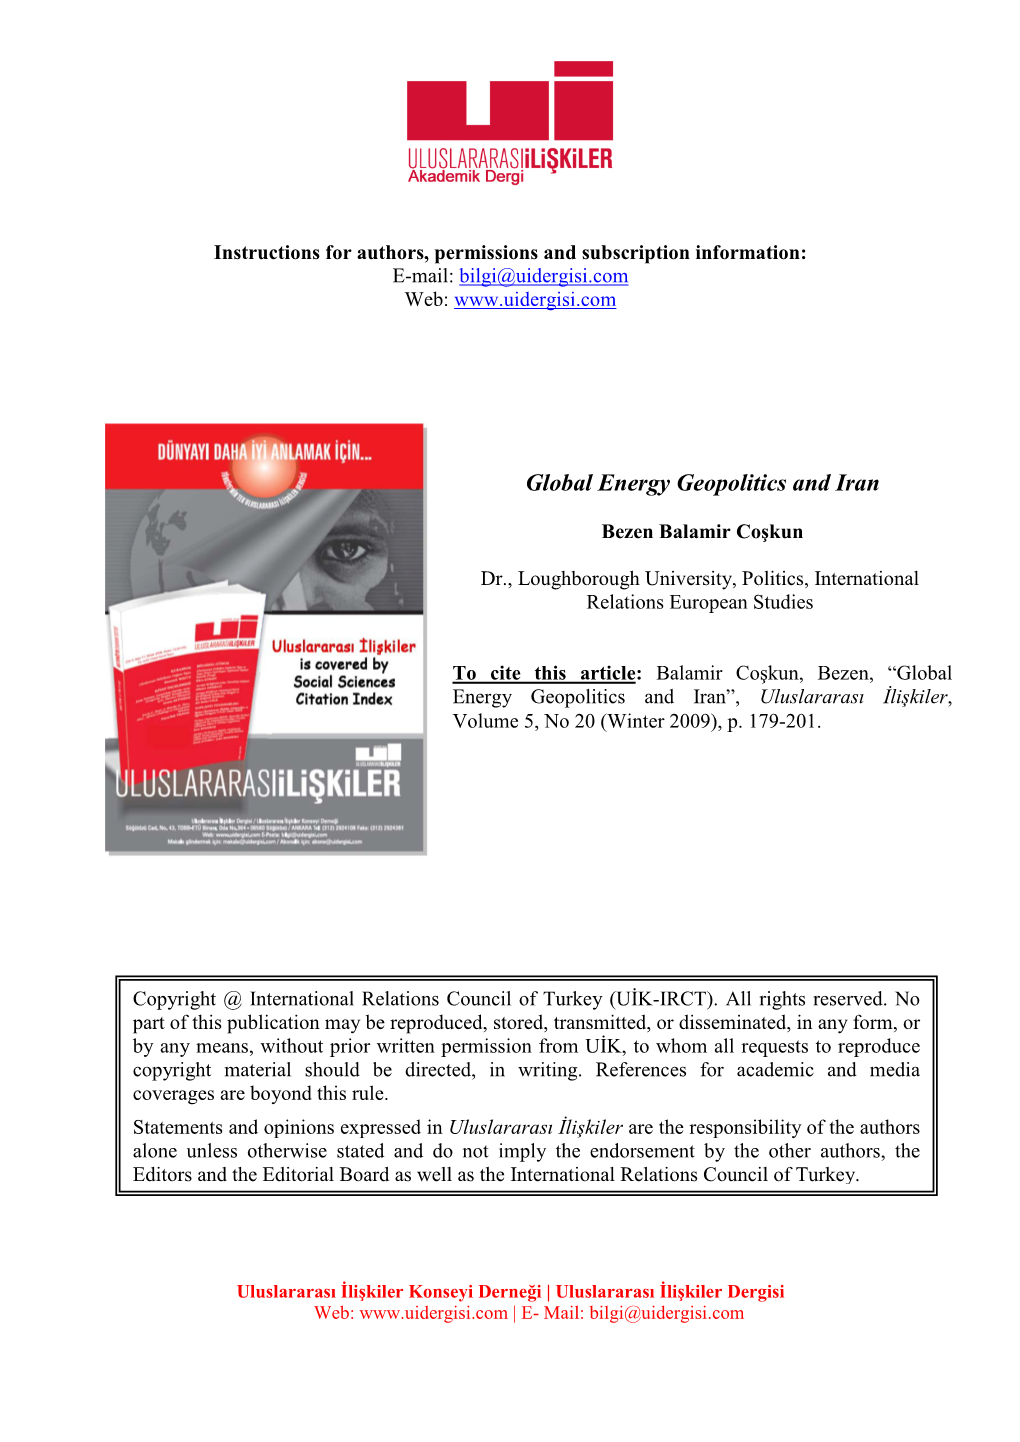 Global Energy Geopolitics and Iran